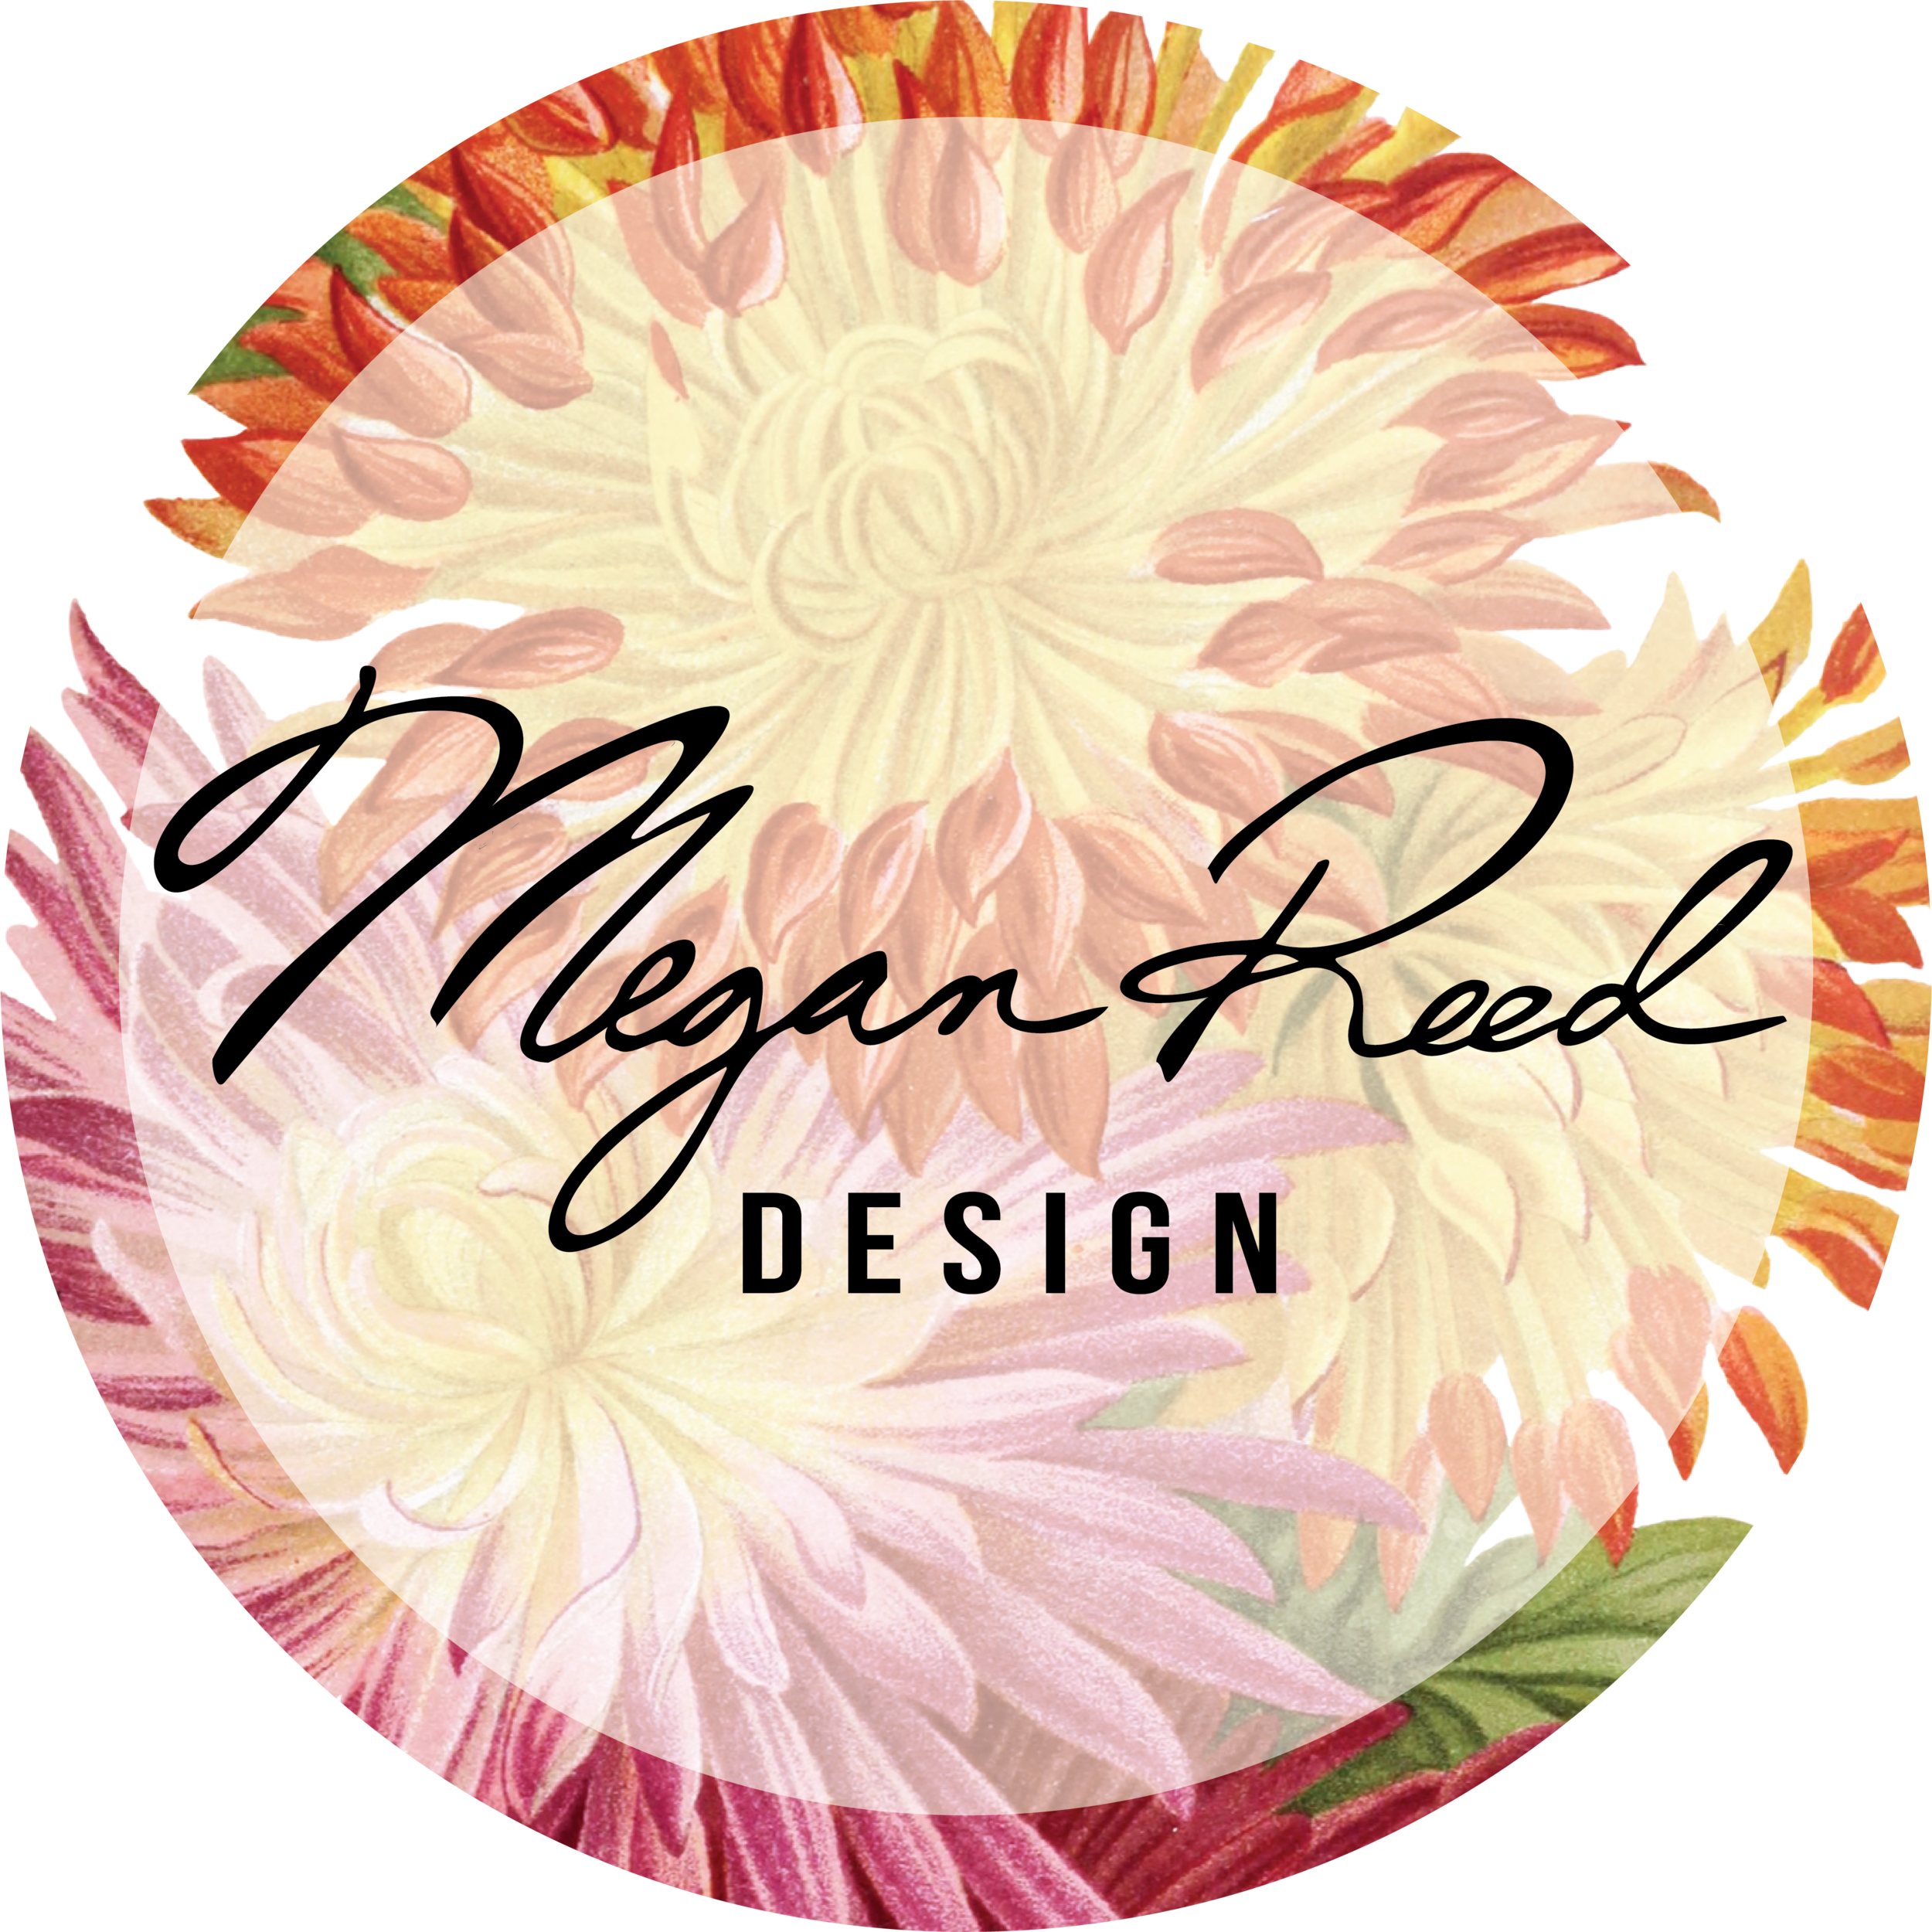 Megan Reed Design